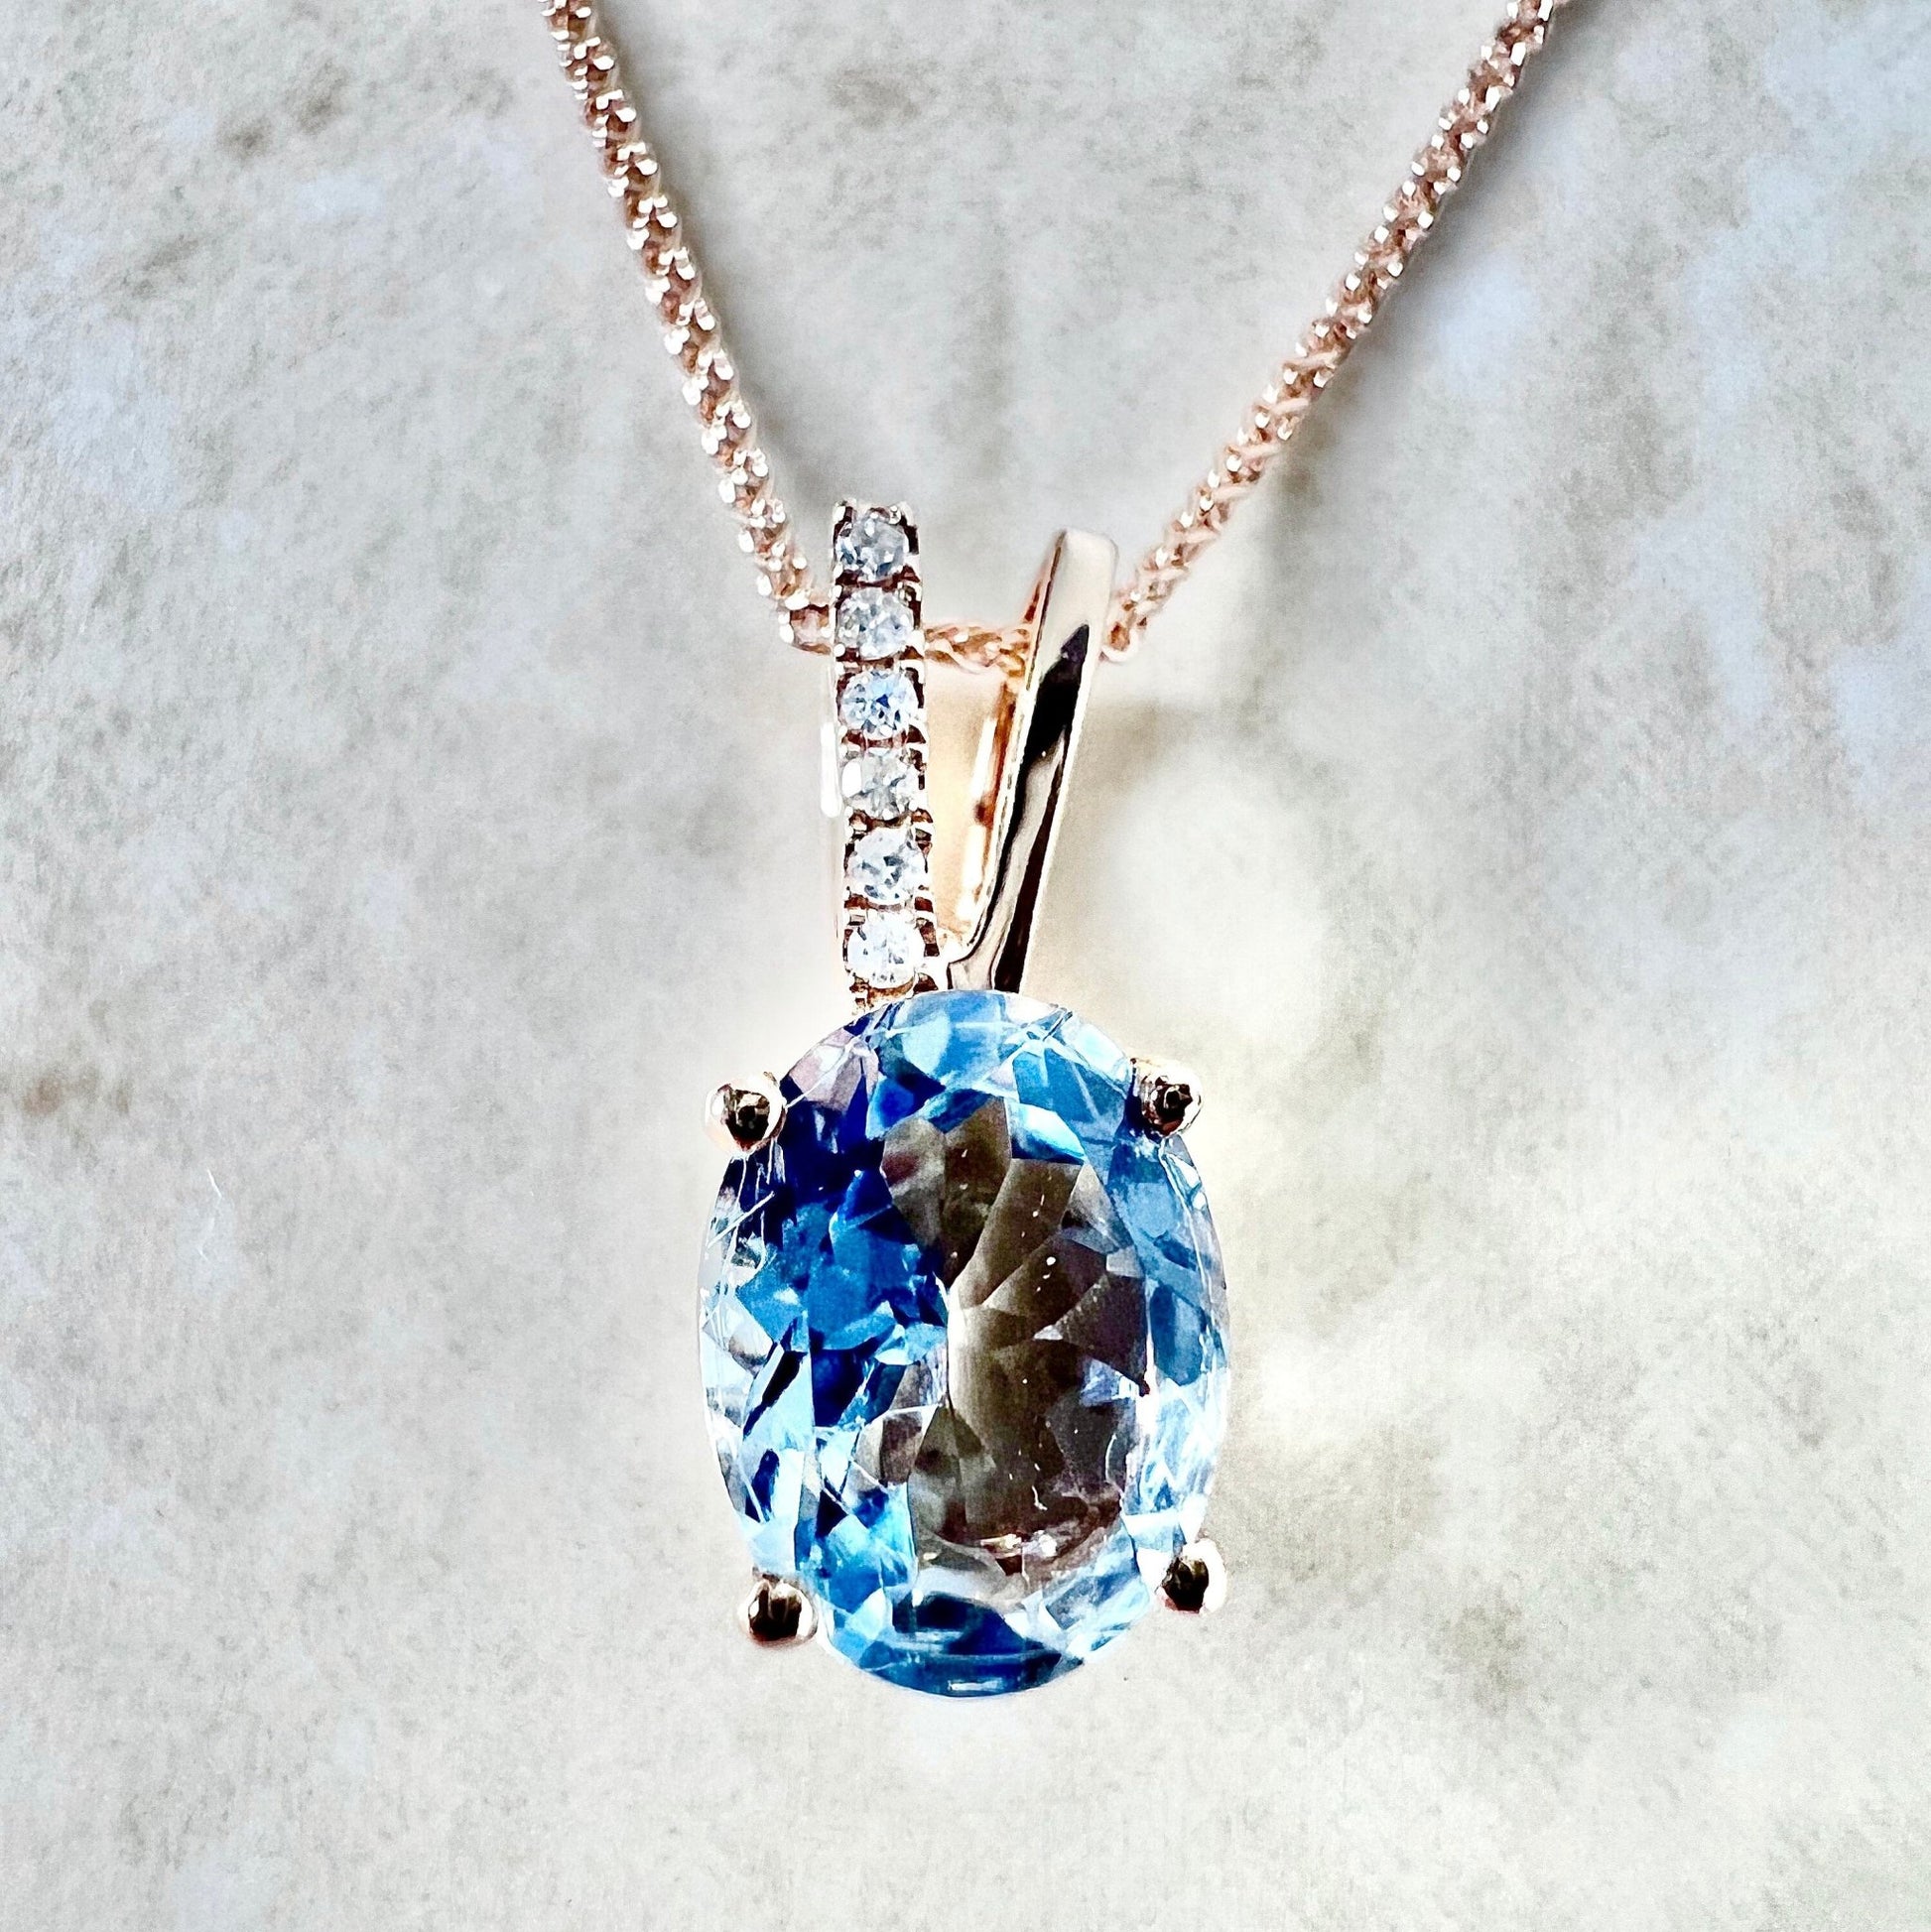 14K Oval Aquamarine & Diamond Pendant Necklace - Rose Gold Aquamarine Pendant - March Birthstone - Birthday Gift For Her - Holiday Gift